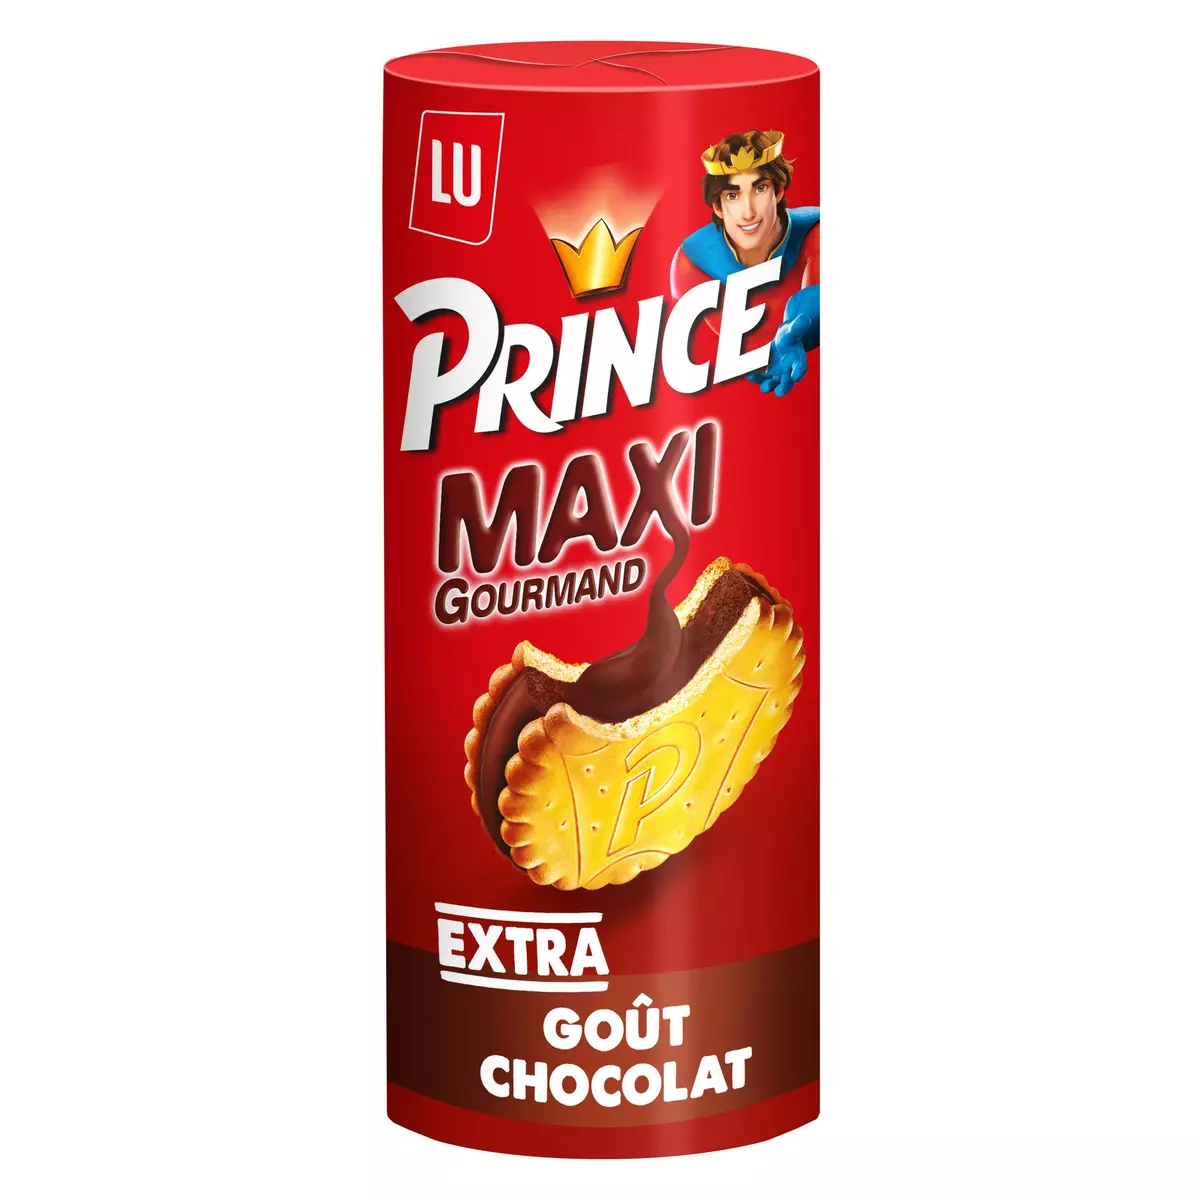 PRINCE Maxi gourmand biscuits fourrés goût chocolat 250g